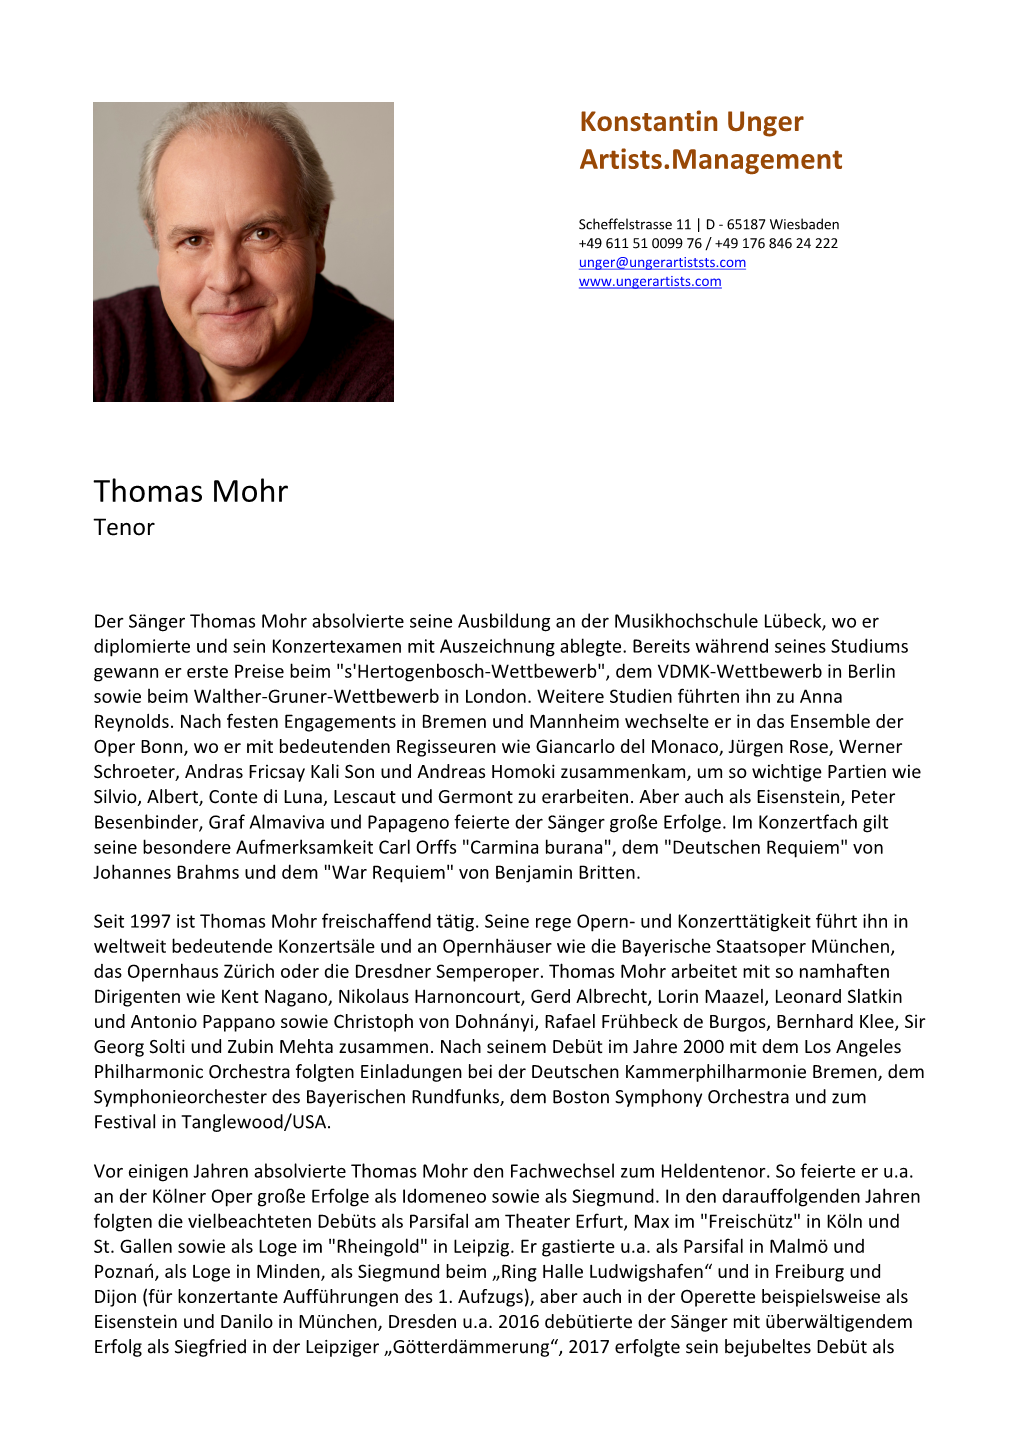 Thomas Mohr Tenor